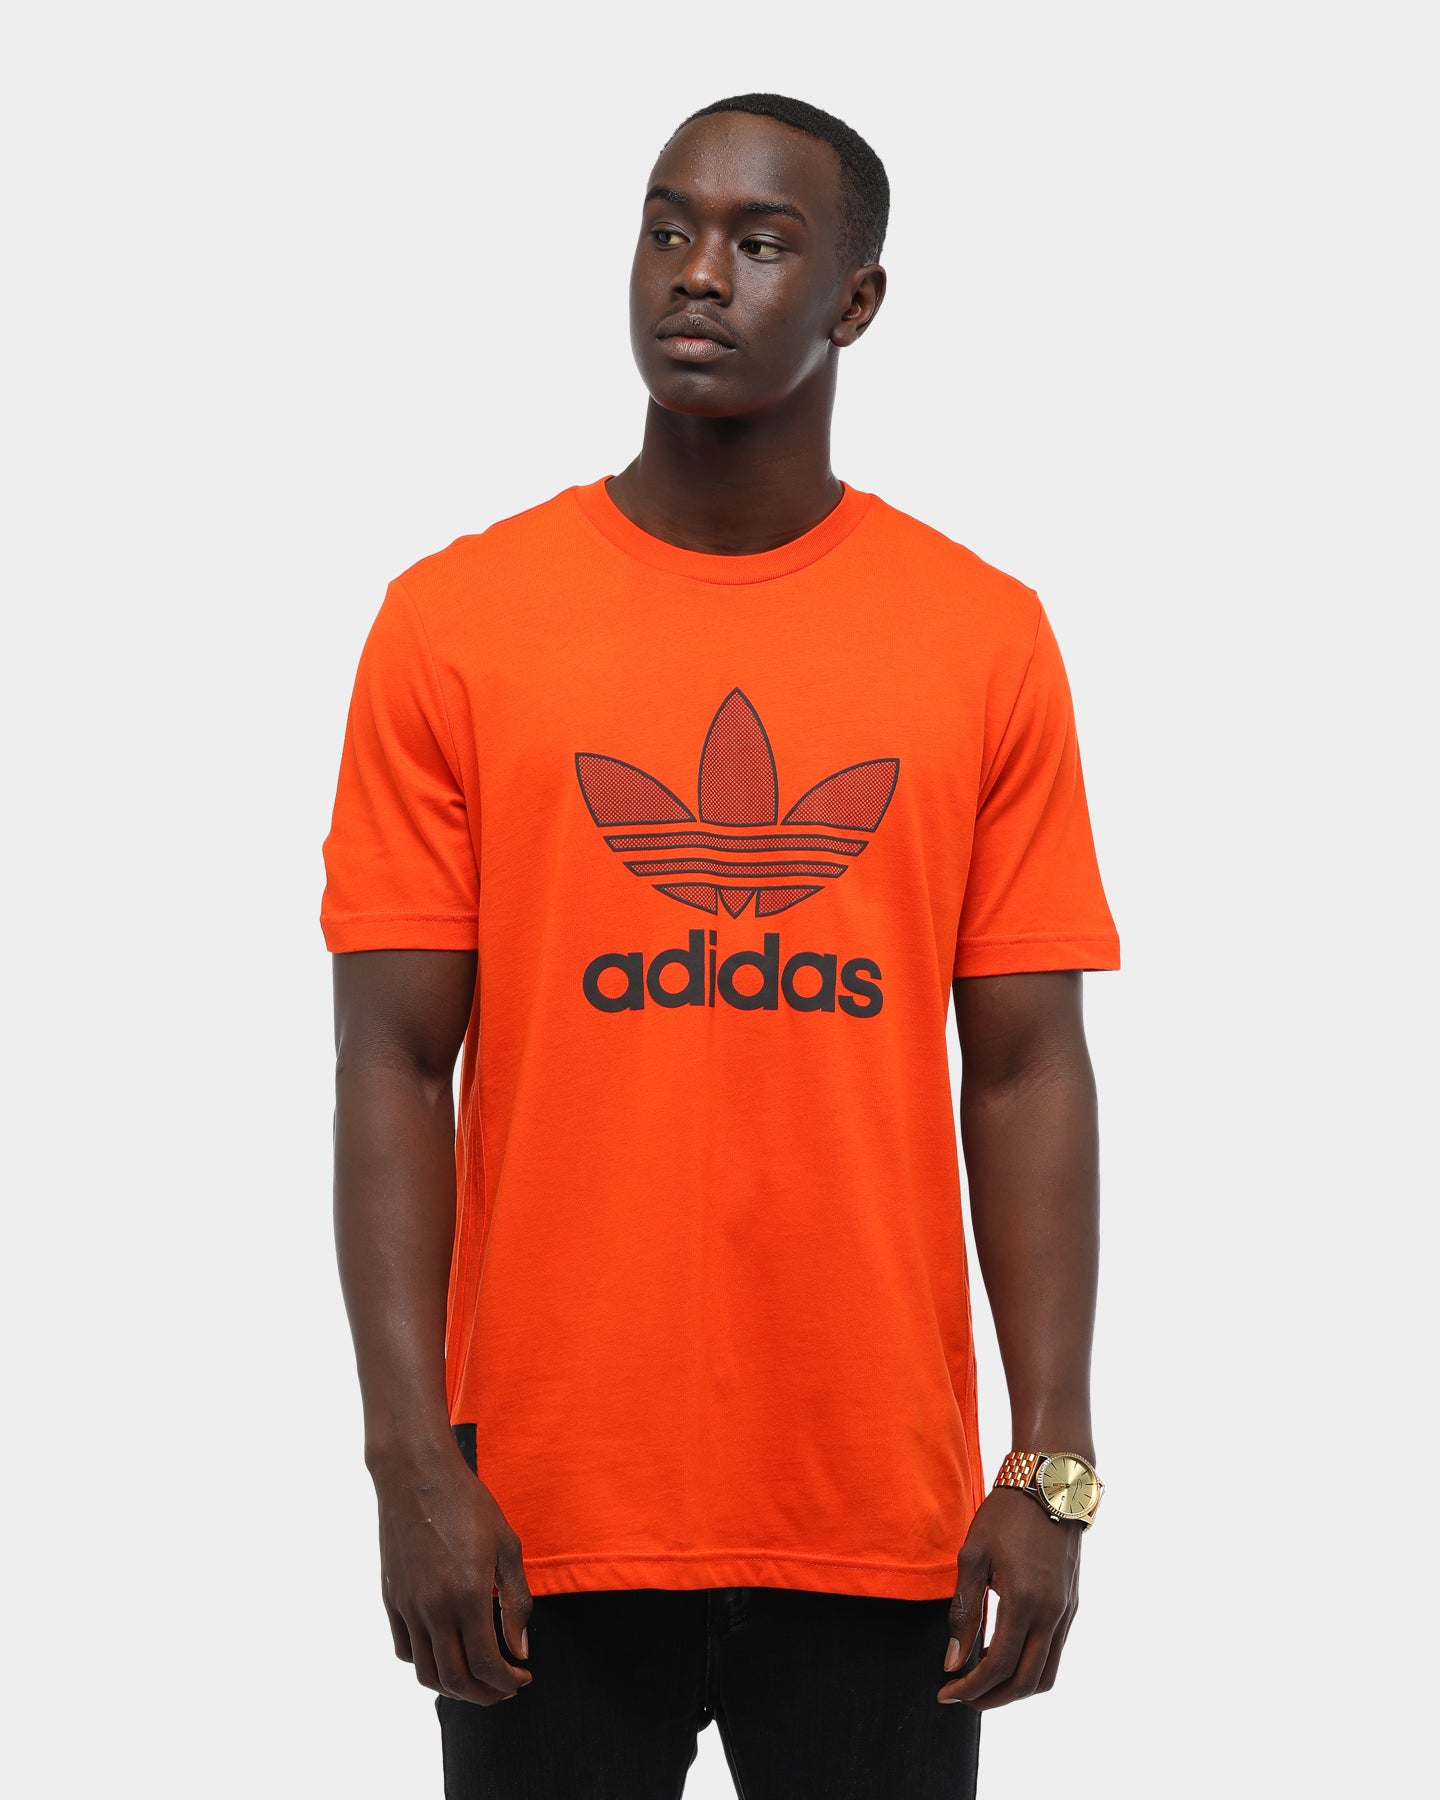 black and orange adidas shirt